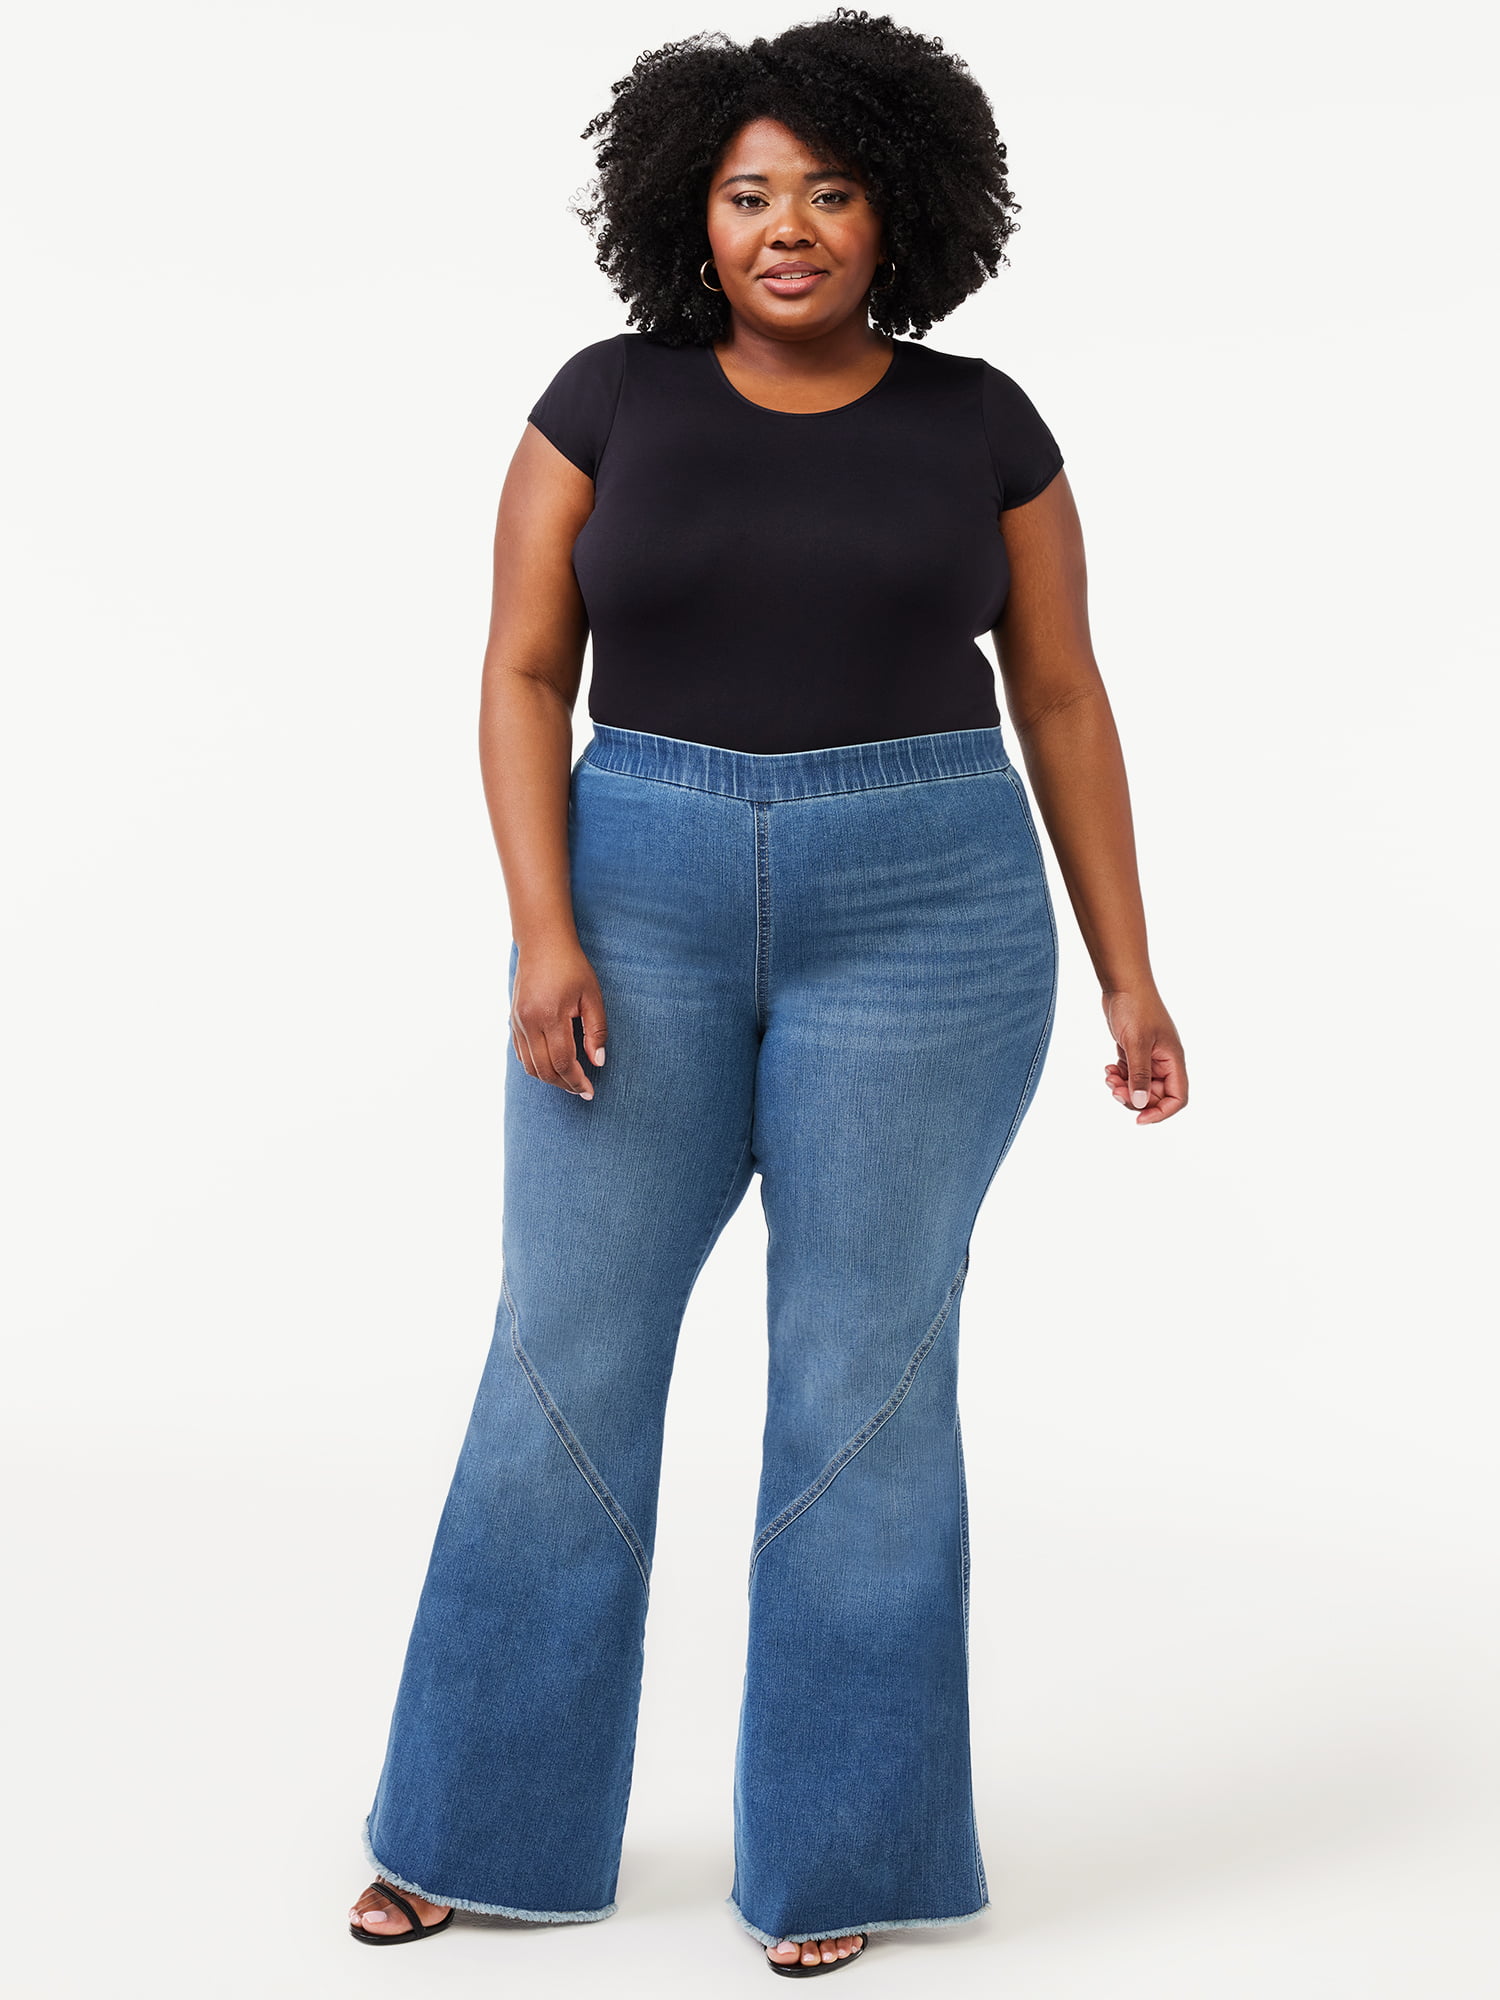 SOFIA VERGARA MELISA Flare Jeans Womens Size 14 36X32 Long High